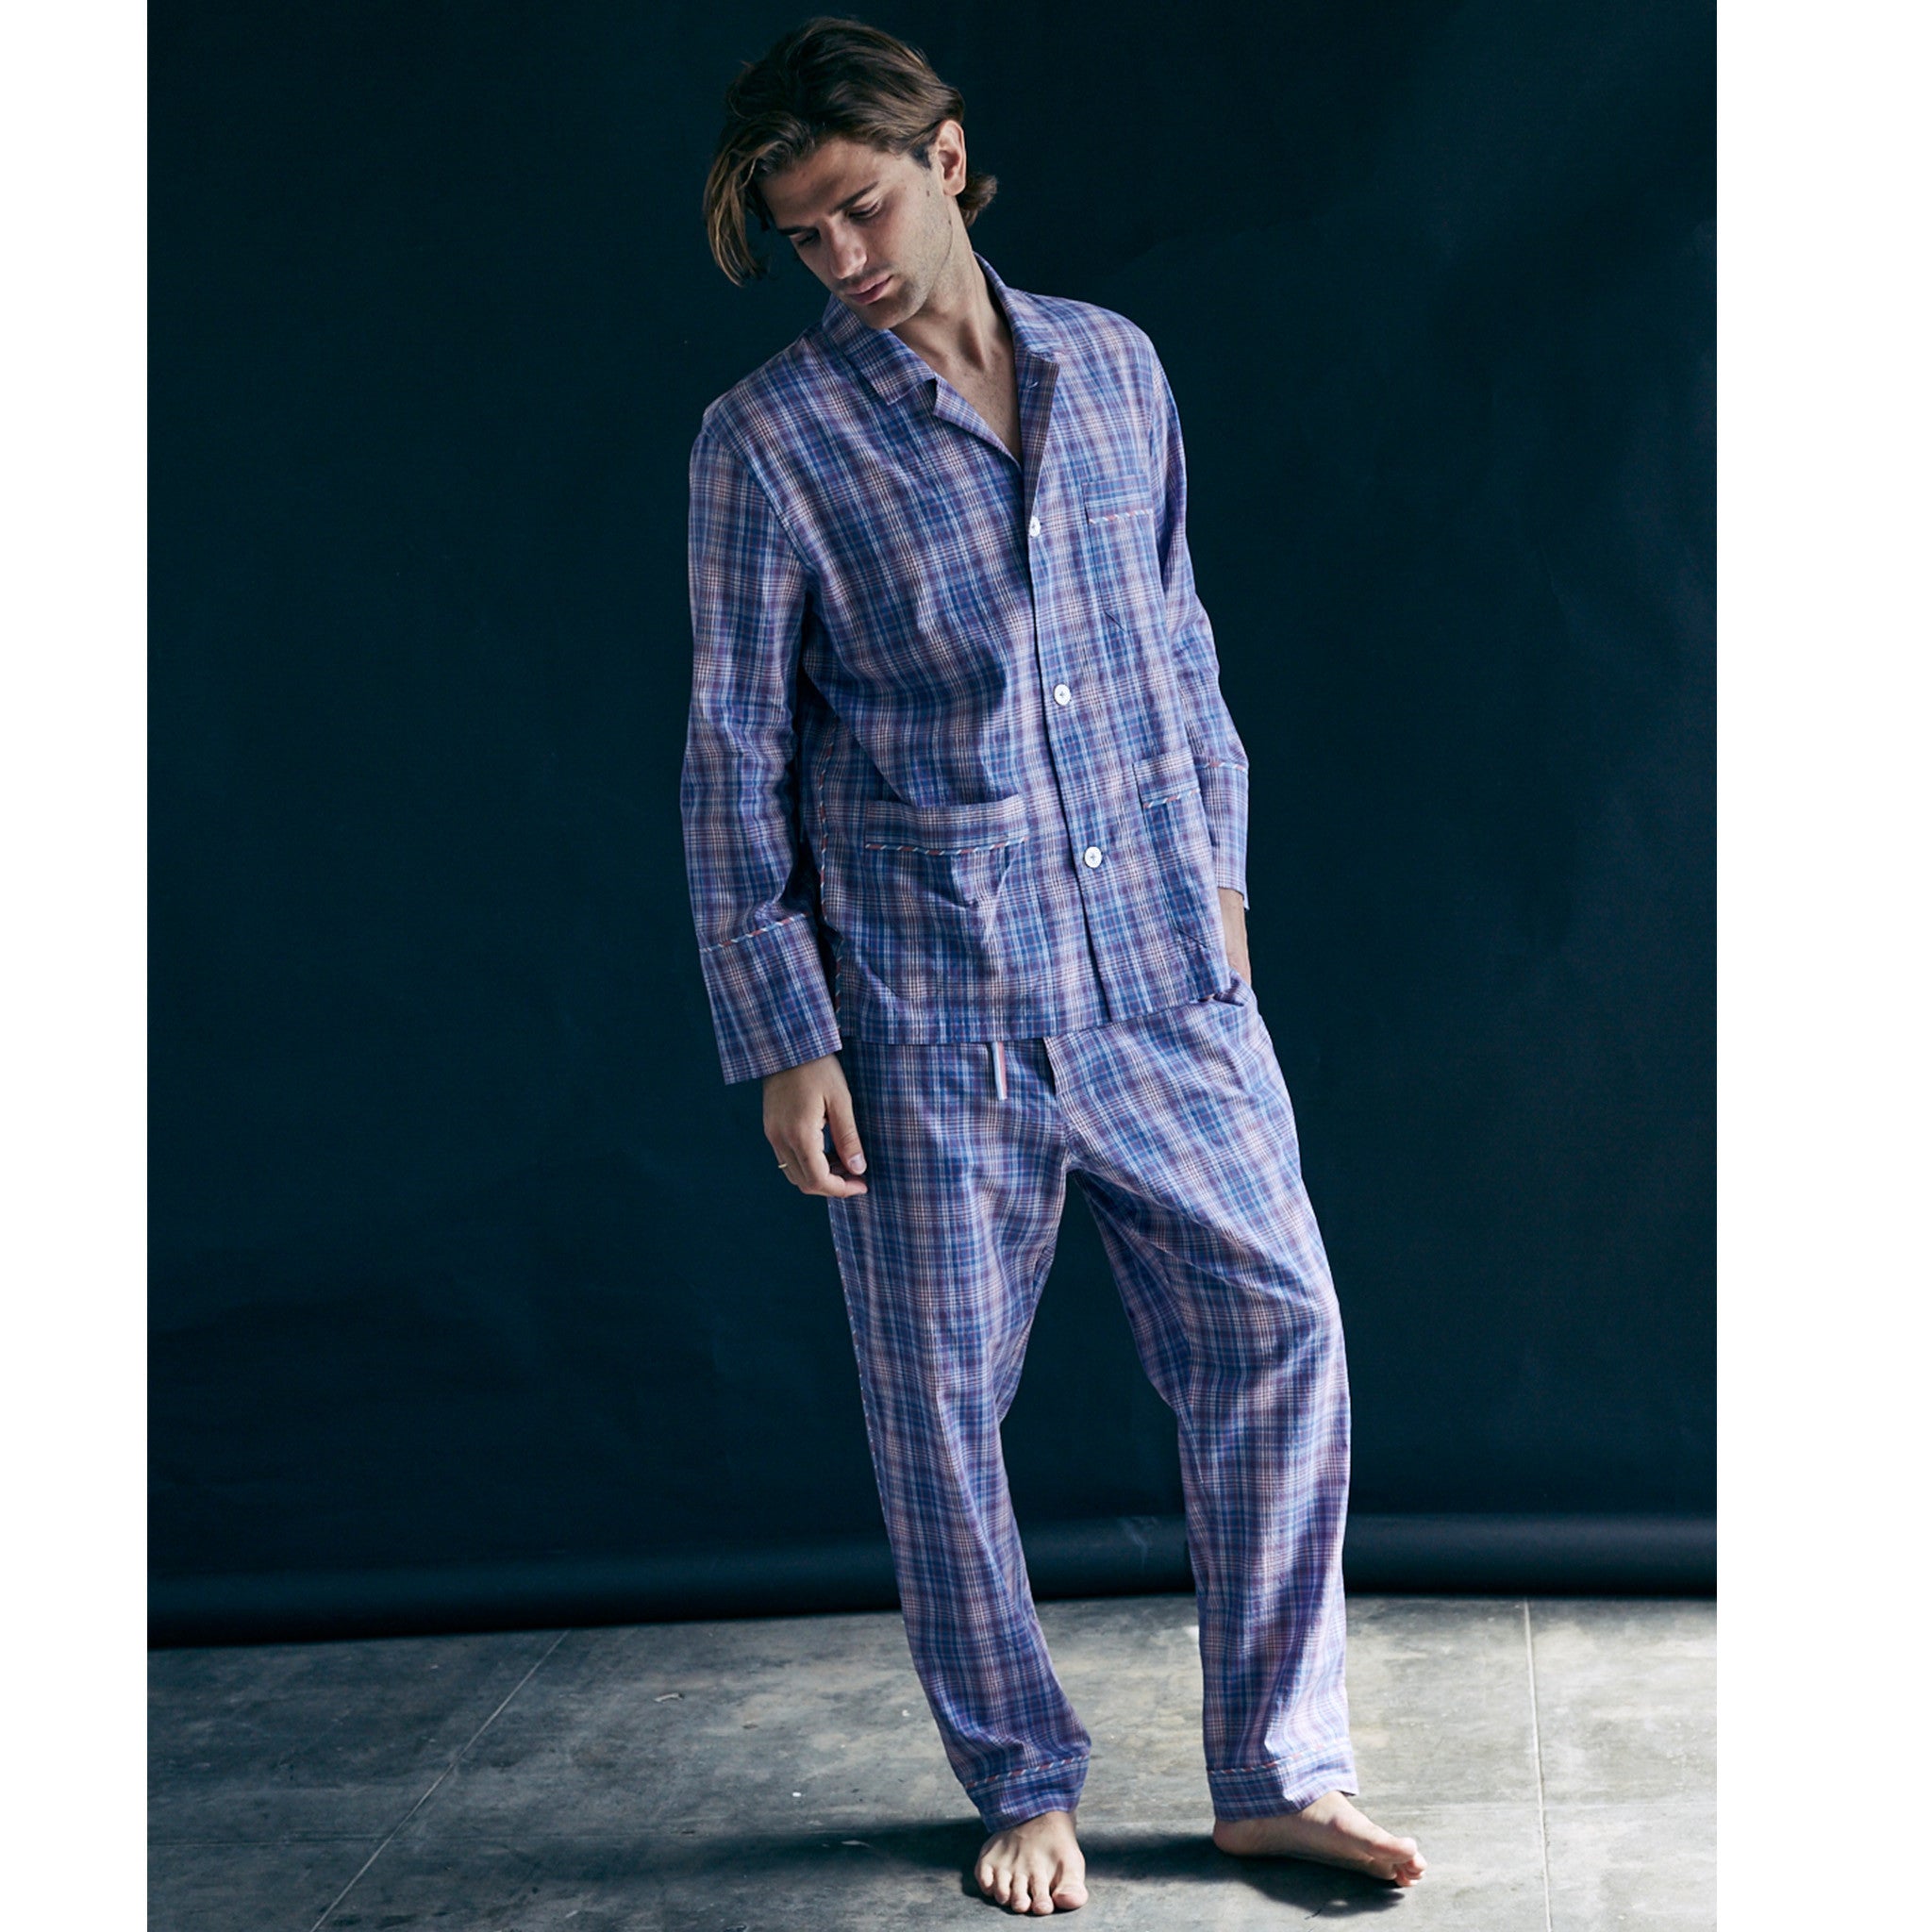 Hyperion Pajama Shirt in Blue Plaid Italian Cotton